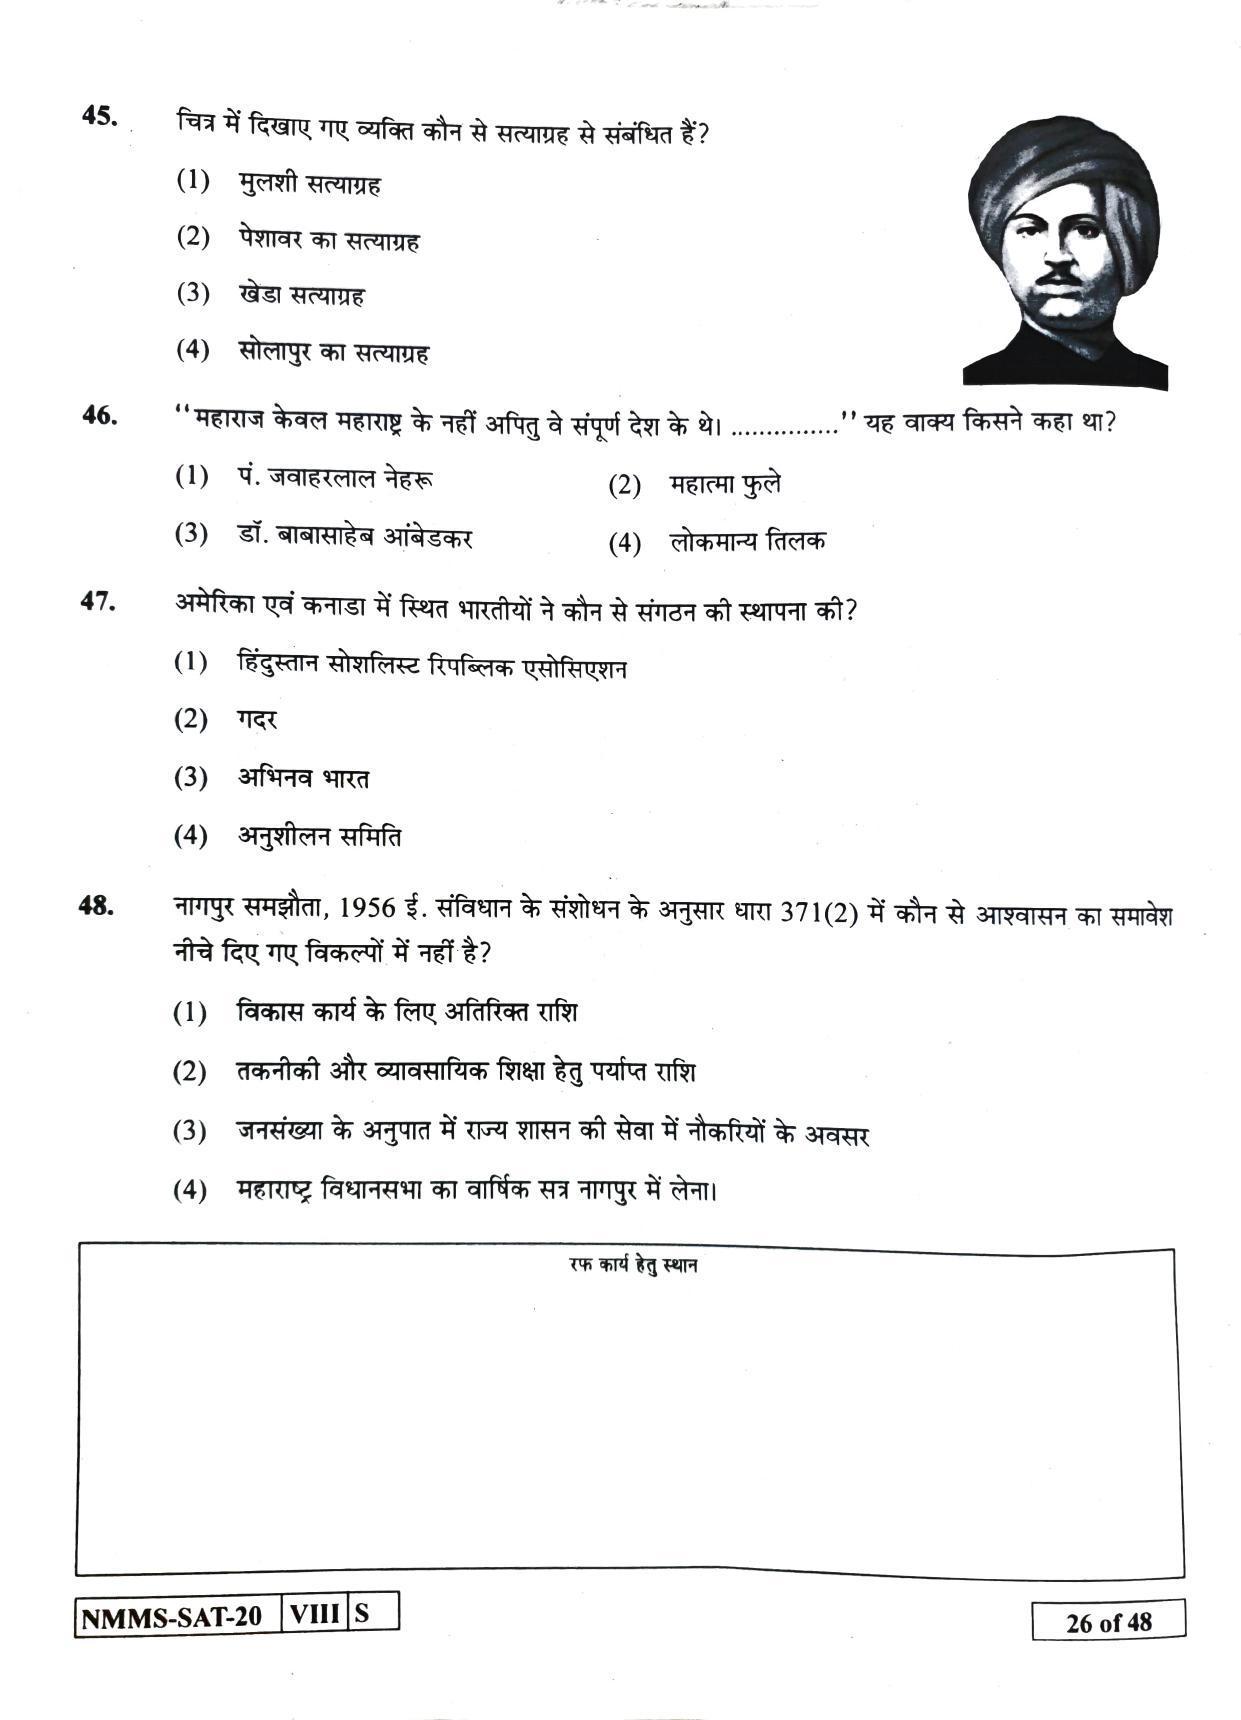 SAT HINDI 2020-21 Class 8 Maharashtra NMMS Question Papers - Page 26